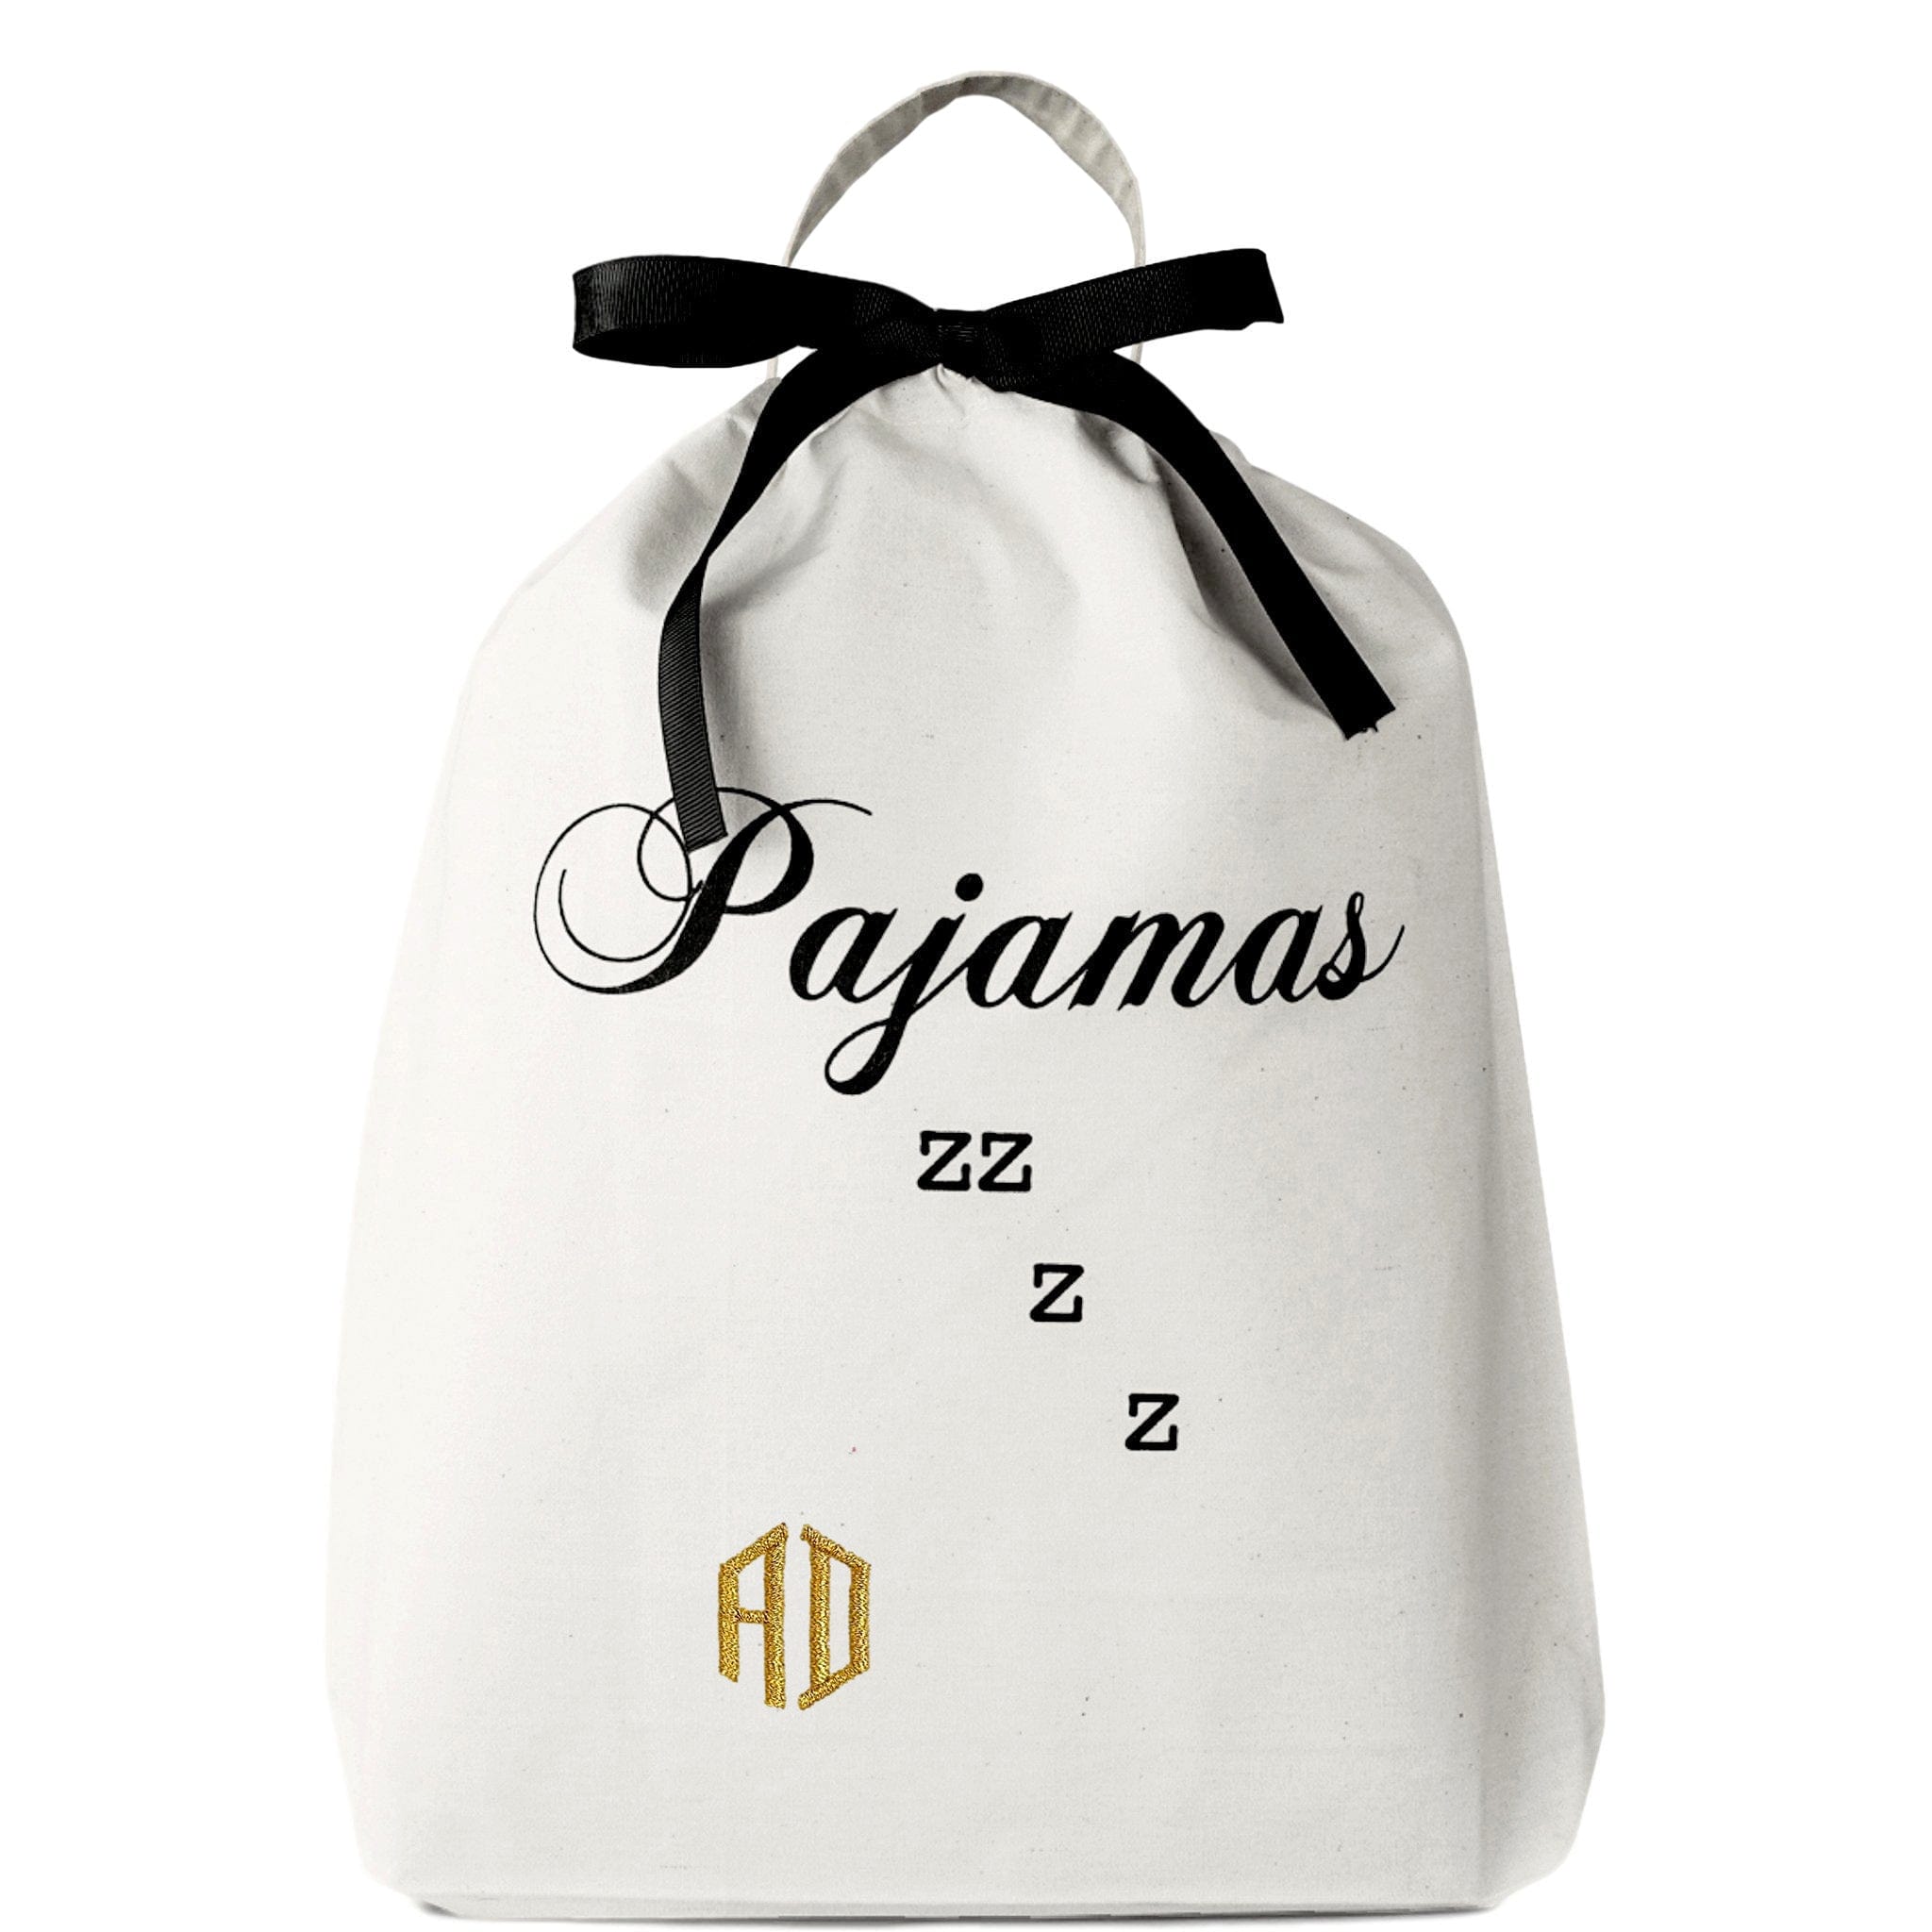 Pajamas Zzzz bag with a monogram on the bottom left.